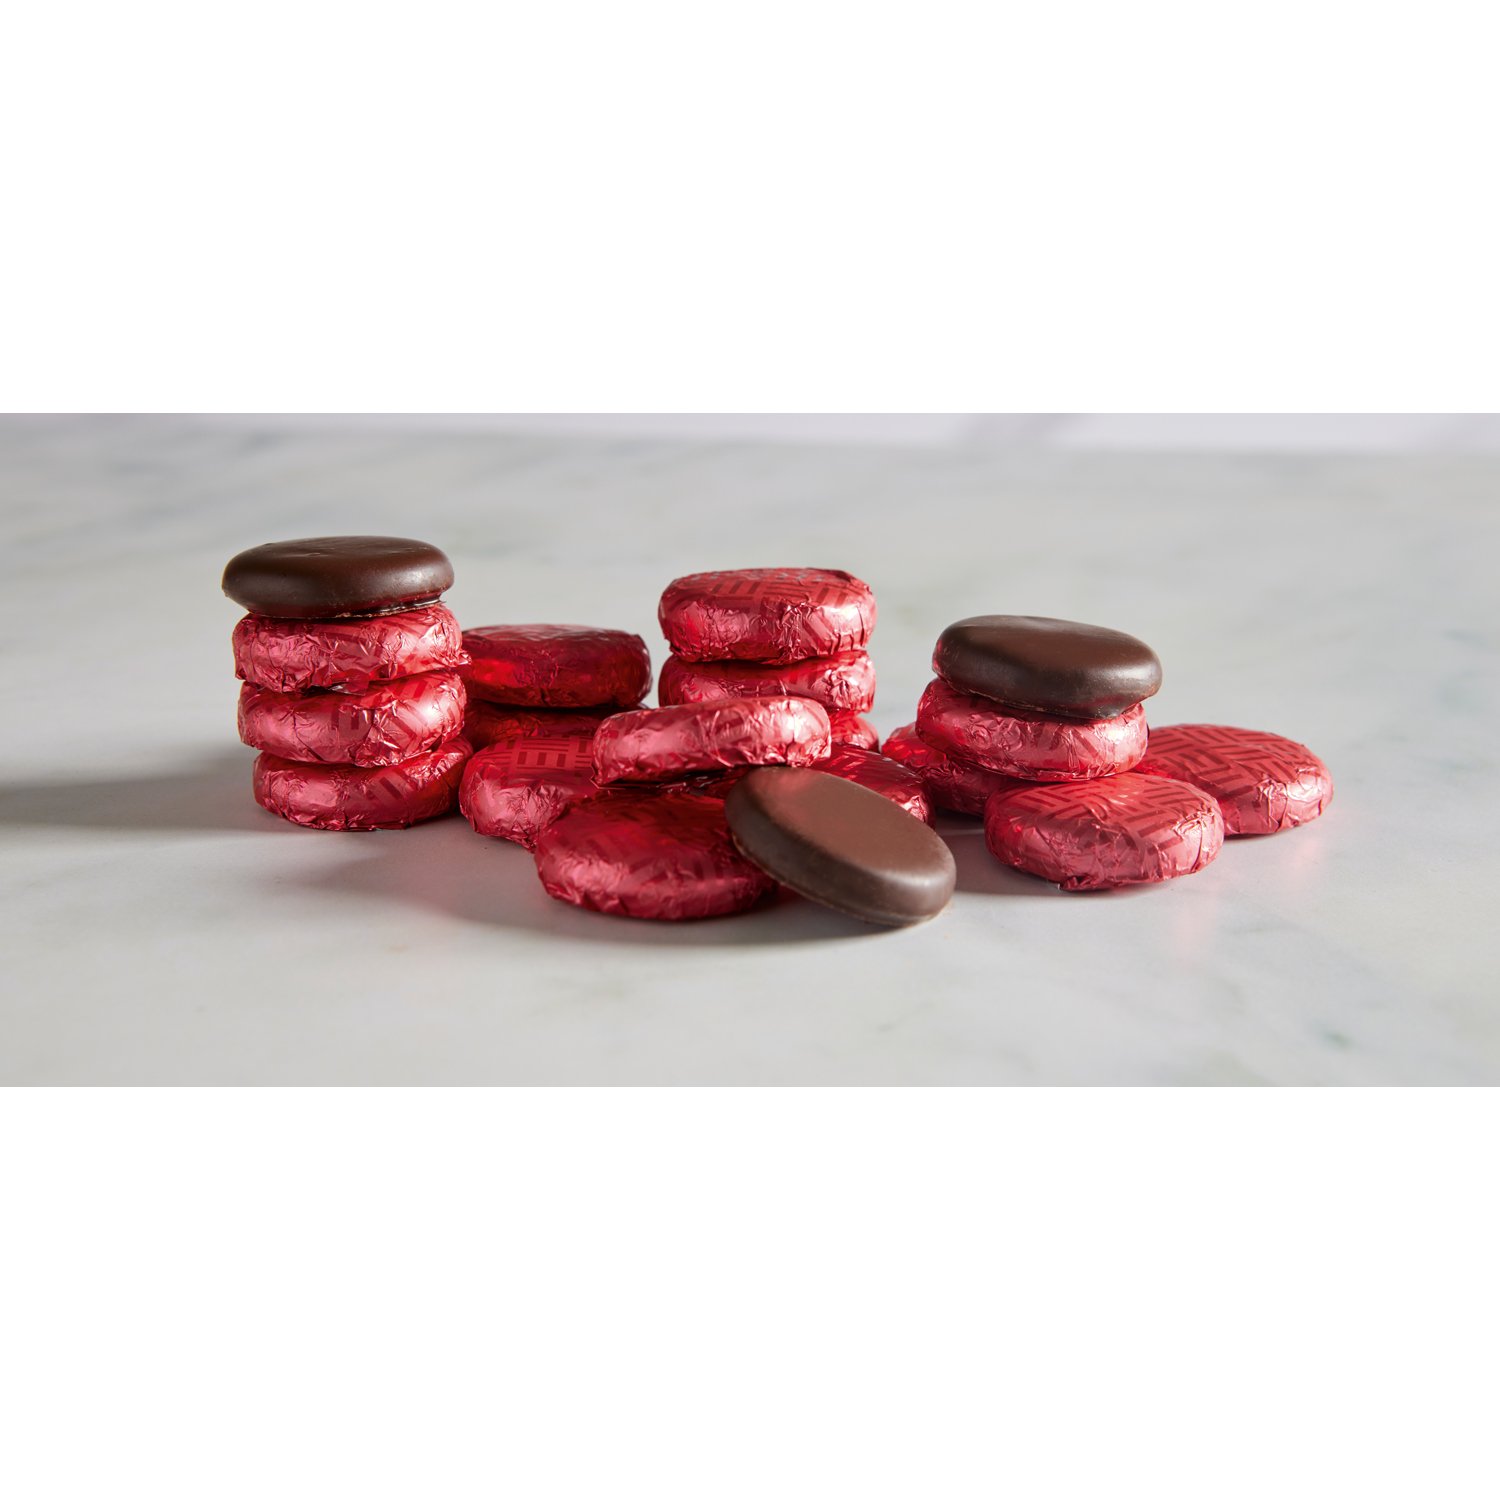 Raspberry crème - dark choc covered fondant in magenta foil 120pcs - 1kg